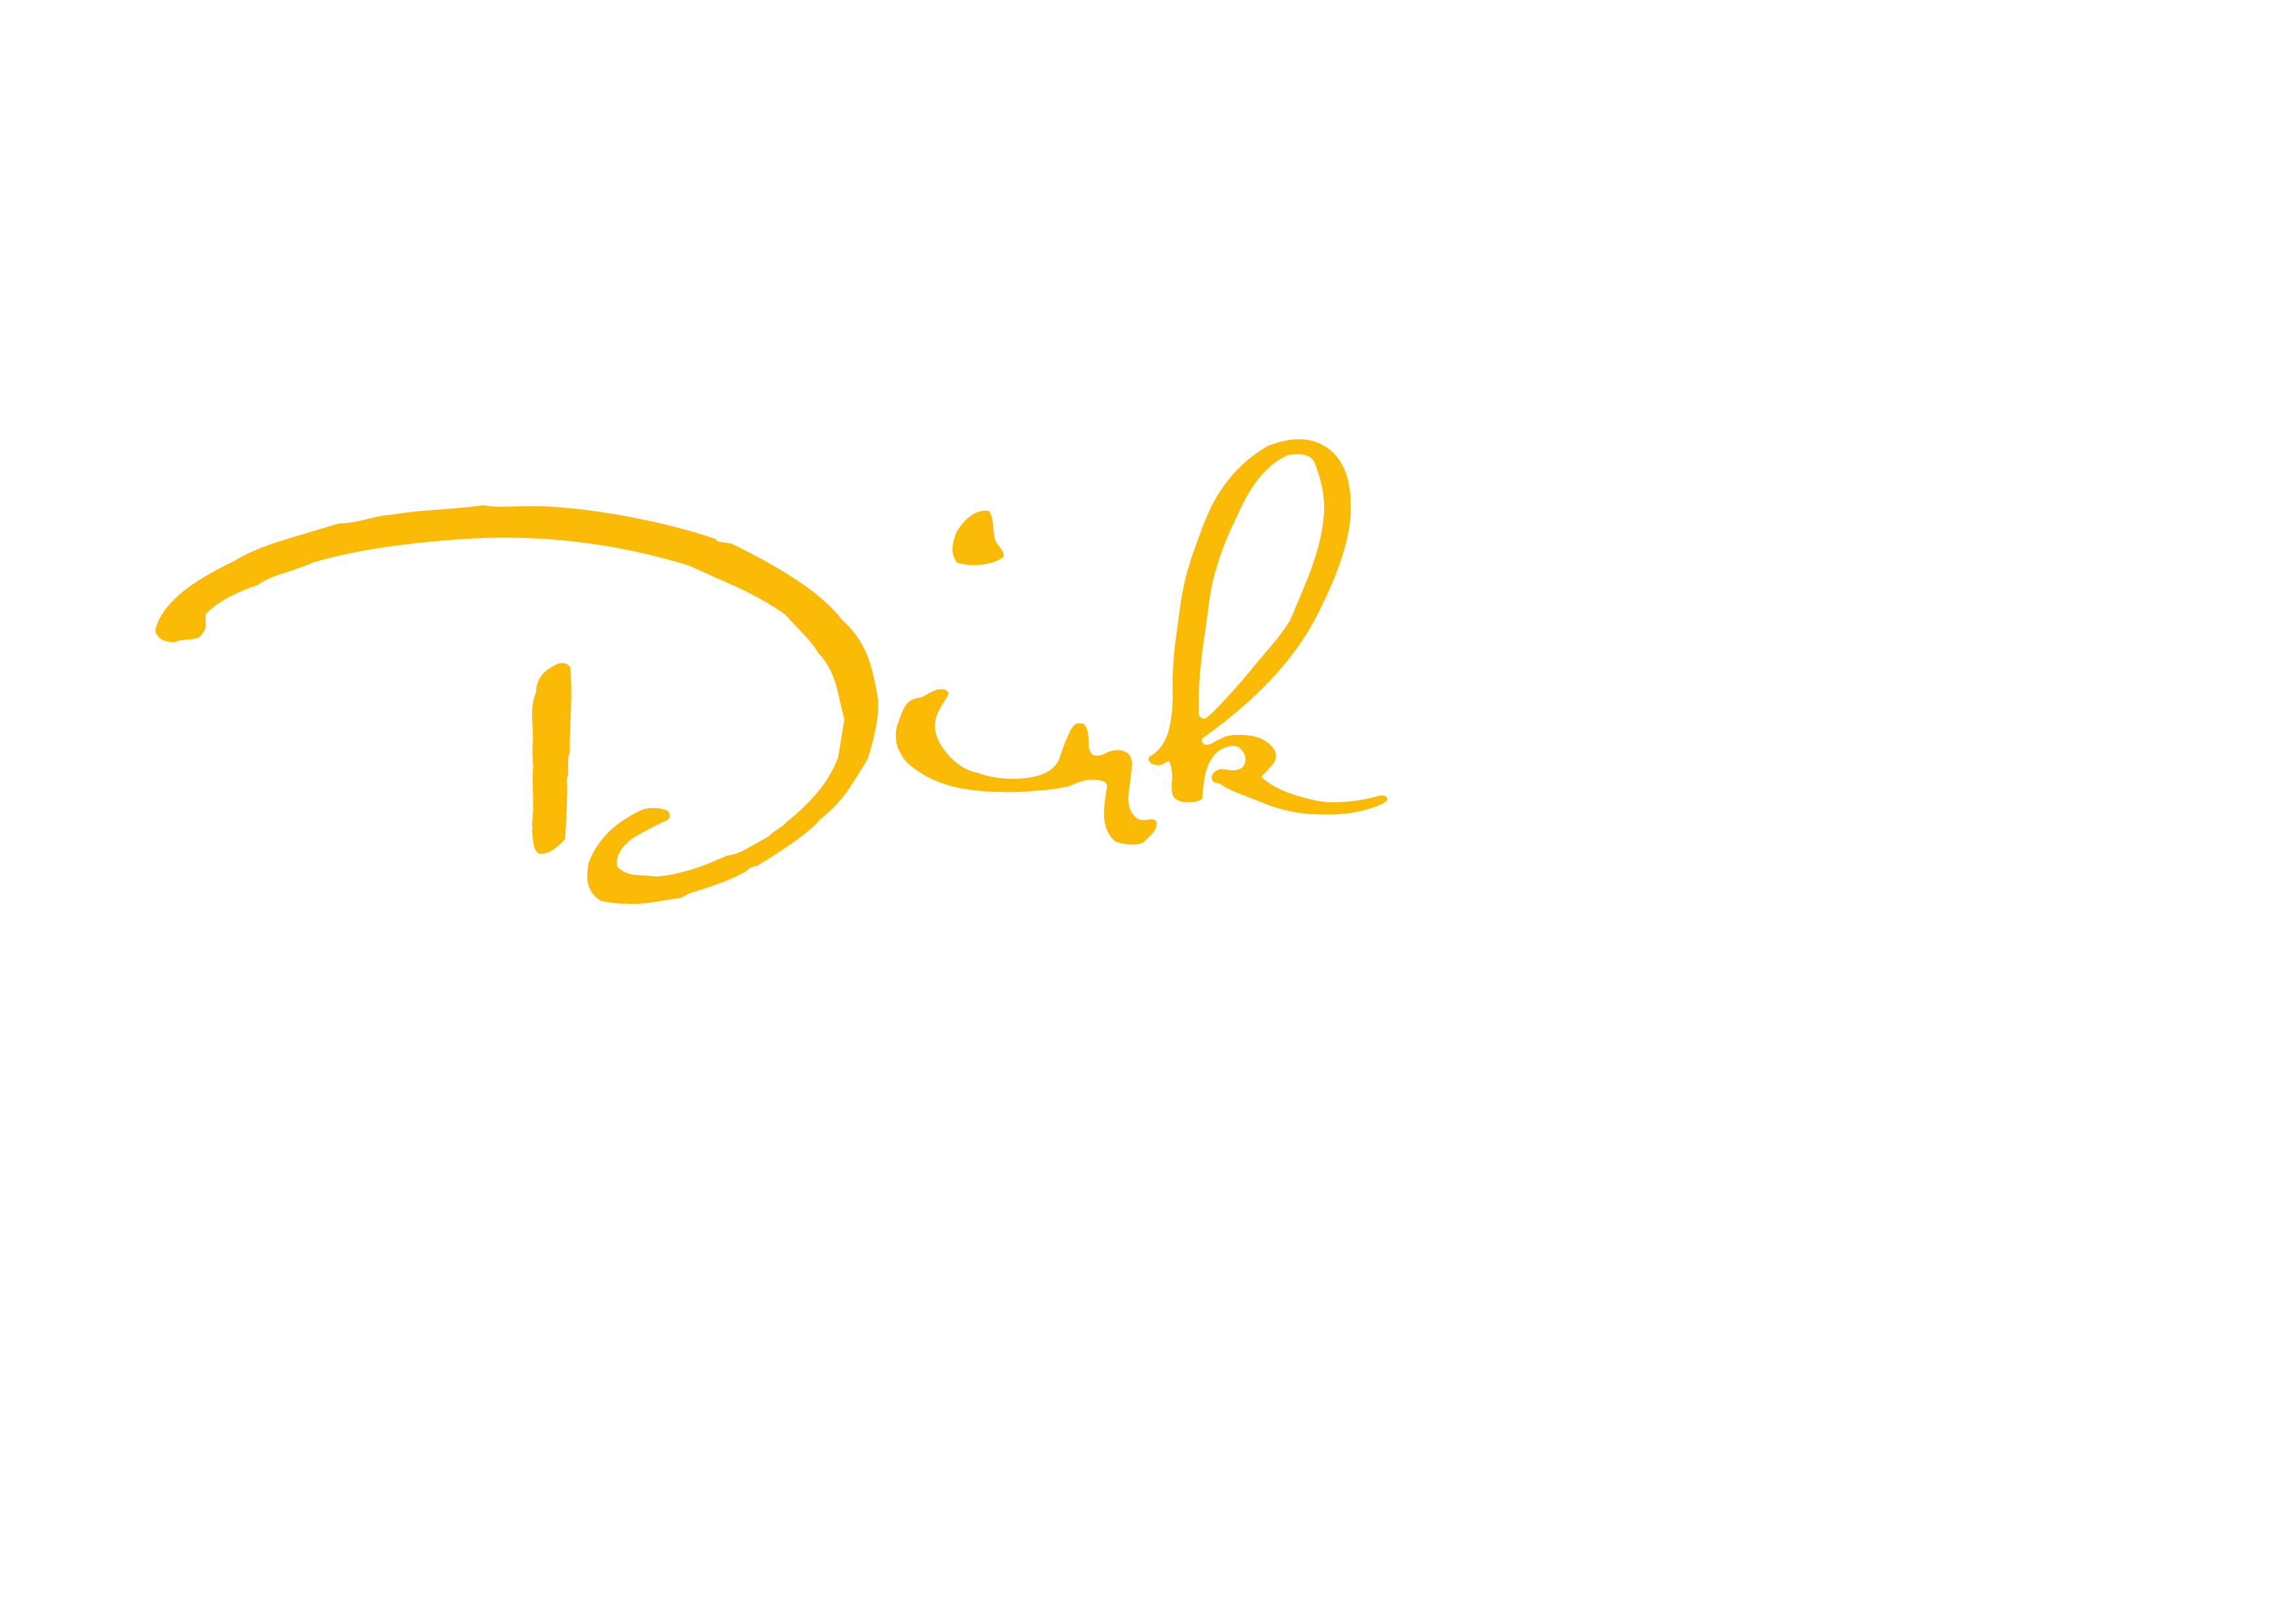 Kreuter | Borgmeier Public Relations GmbH